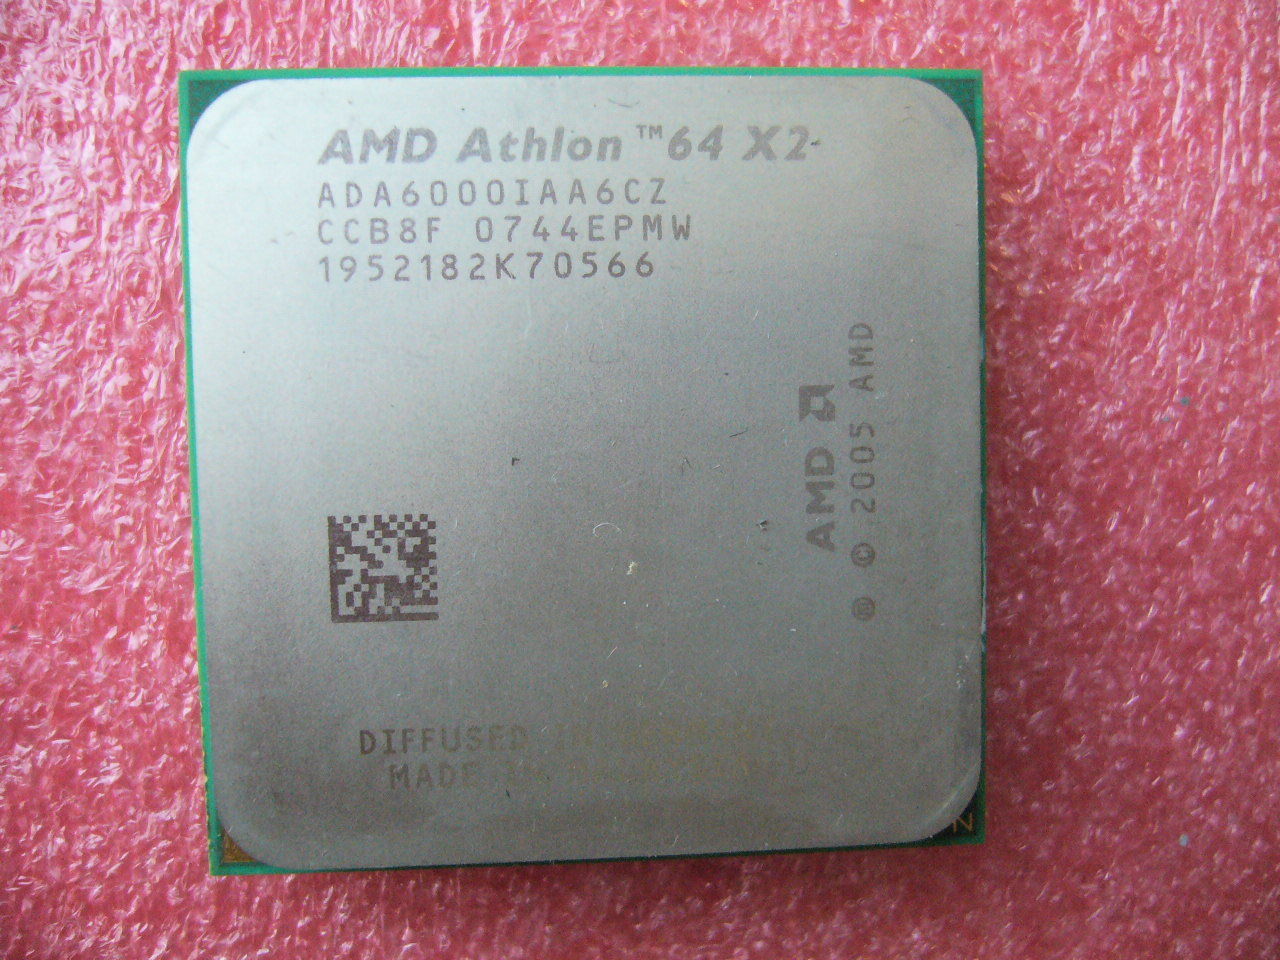 QTY 1x AMD Athlon 64 X2 6000+ 3 GHz Dual-Core (ADA6000IAA6CZ) CPU AM2 940-Pin - zum Schließen ins Bild klicken